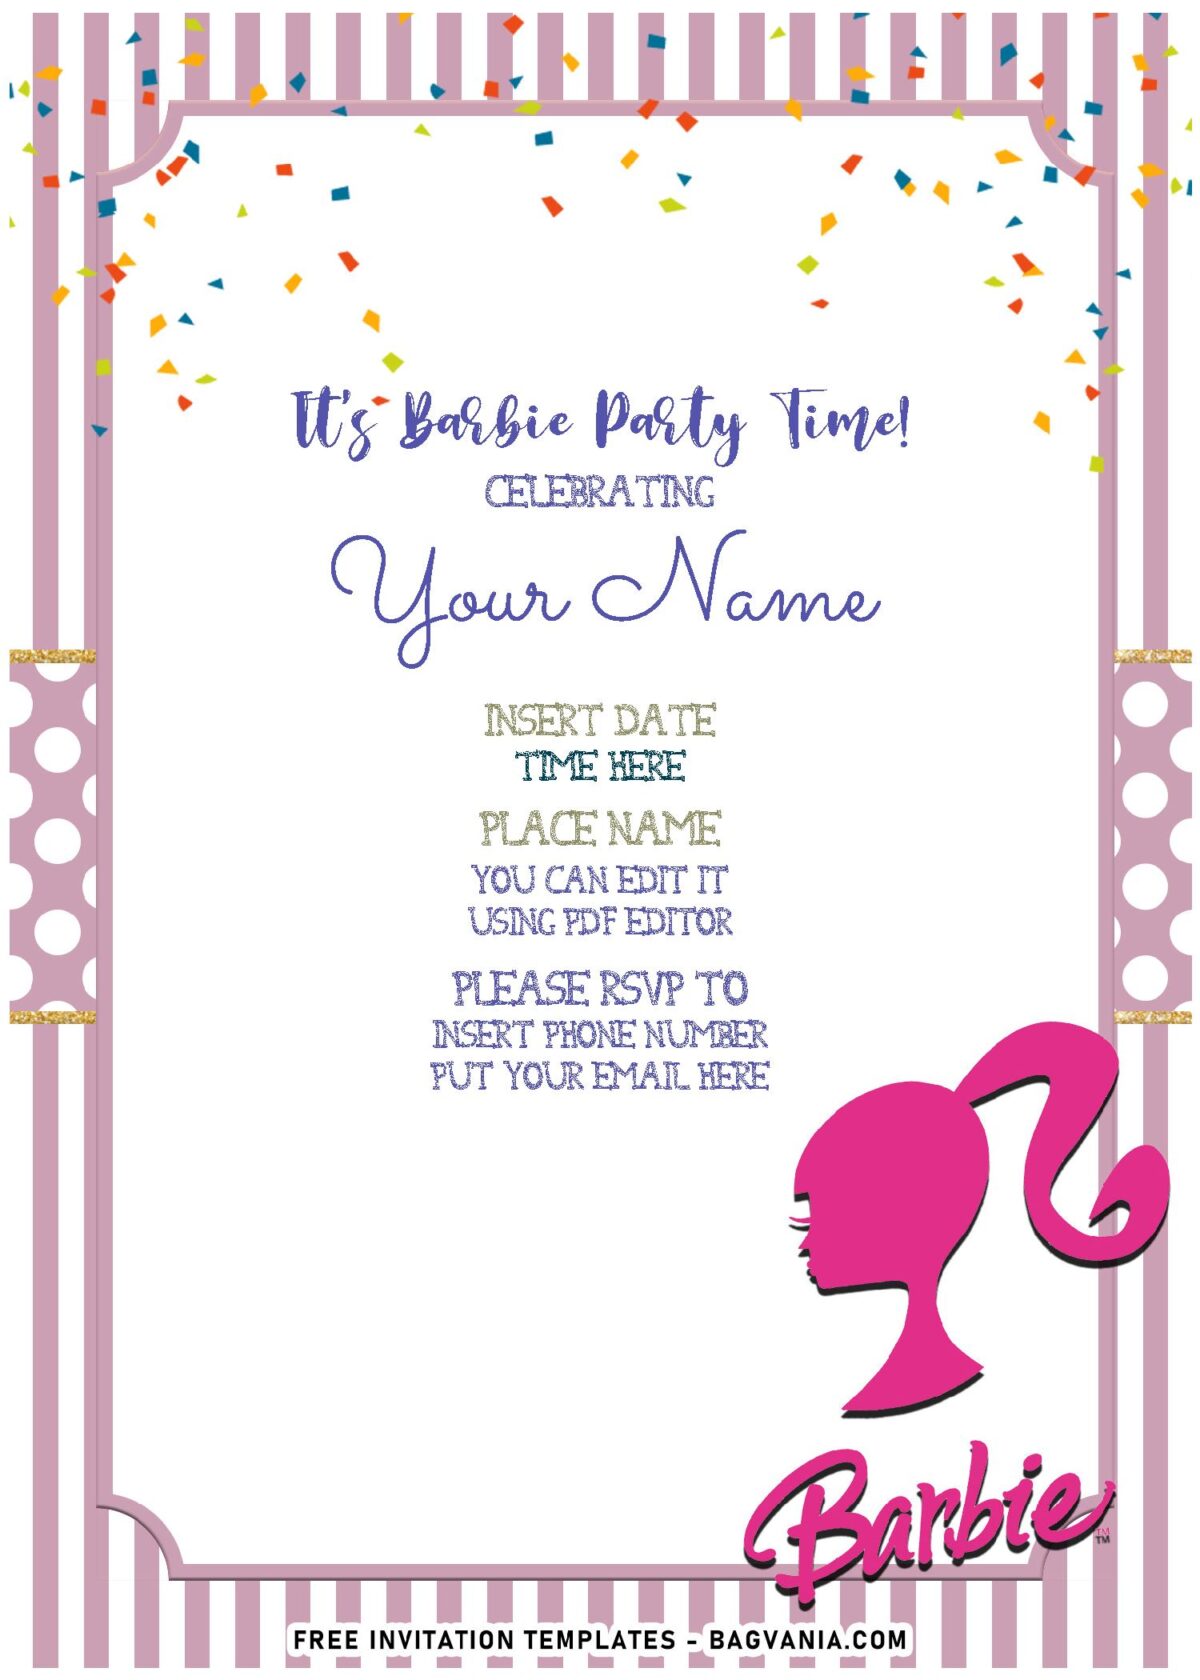 (Free Editable PDF) Festive Barbie Birthday Party Invitation Templates